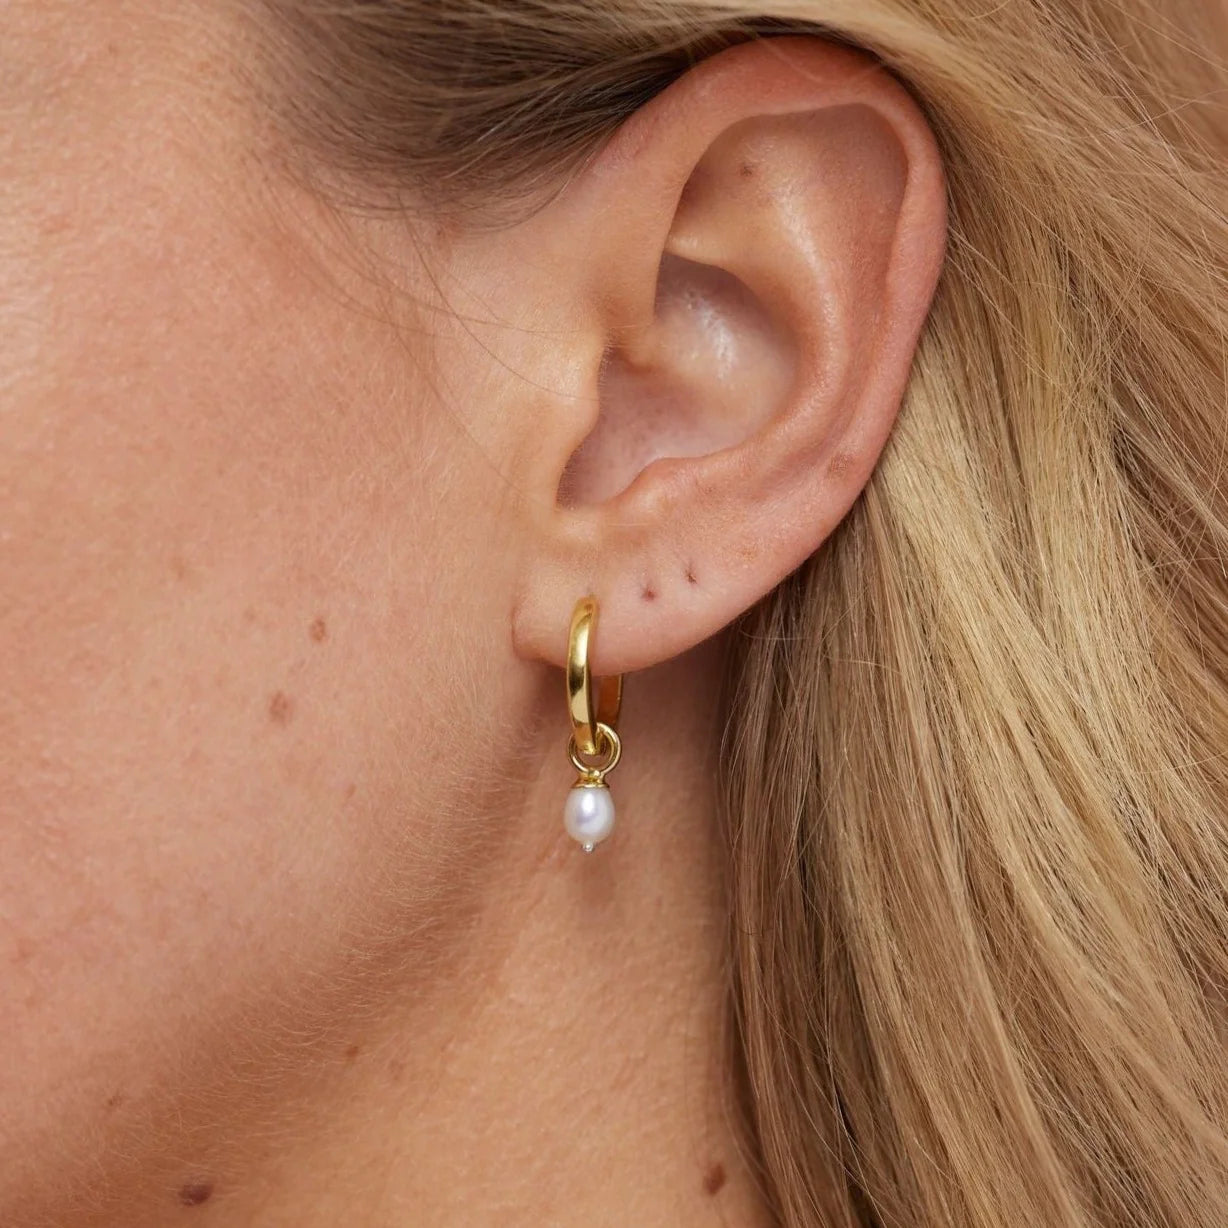 Toni May Pearl Gold Earring Charm